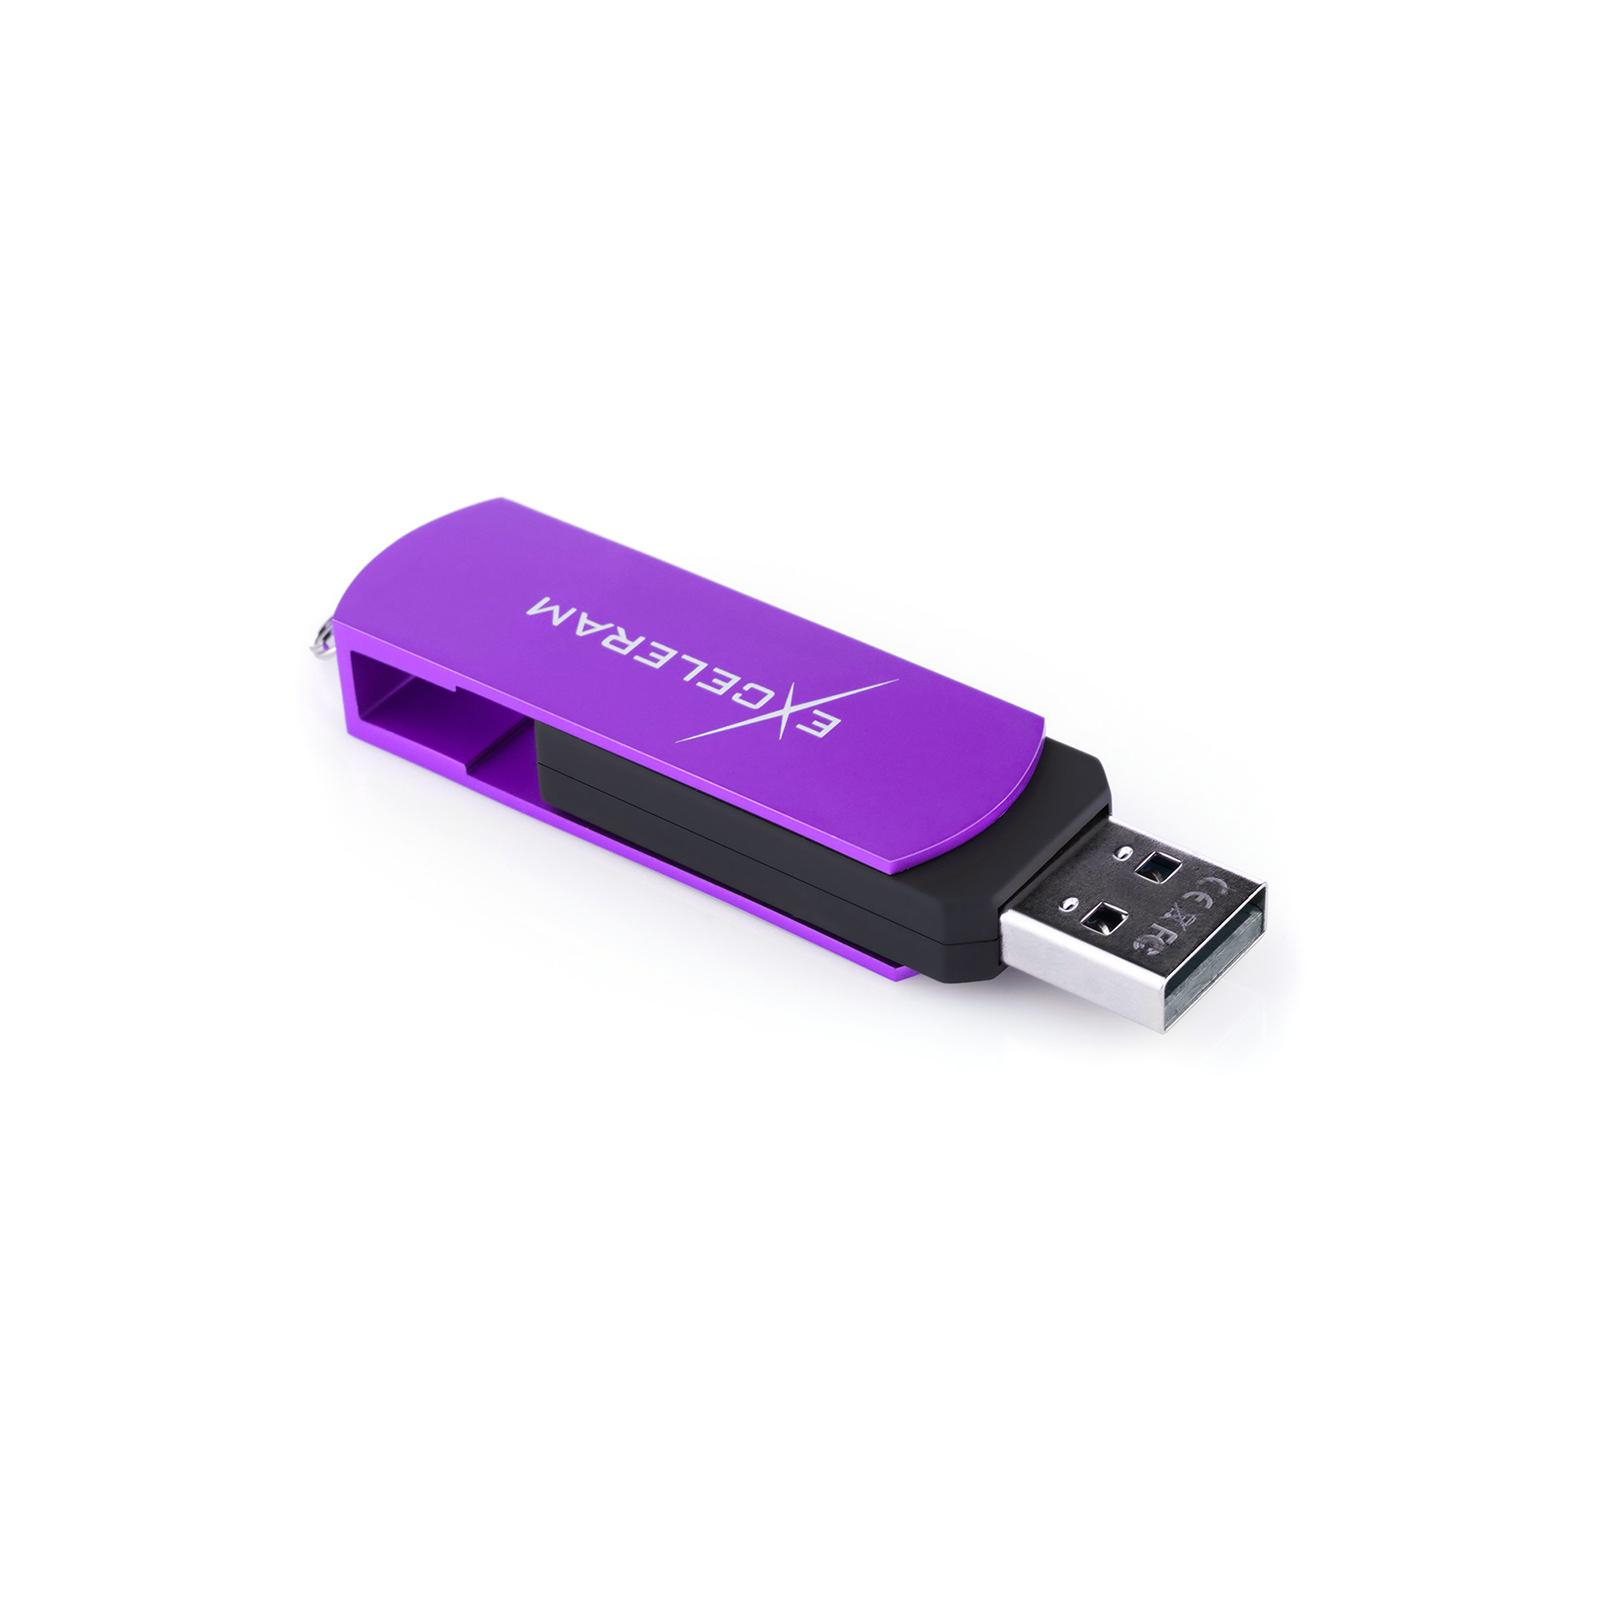 USB флеш накопитель eXceleram 8GB P2 Series Black/Black USB 2.0 (EXP2U2BB08) изображение 5